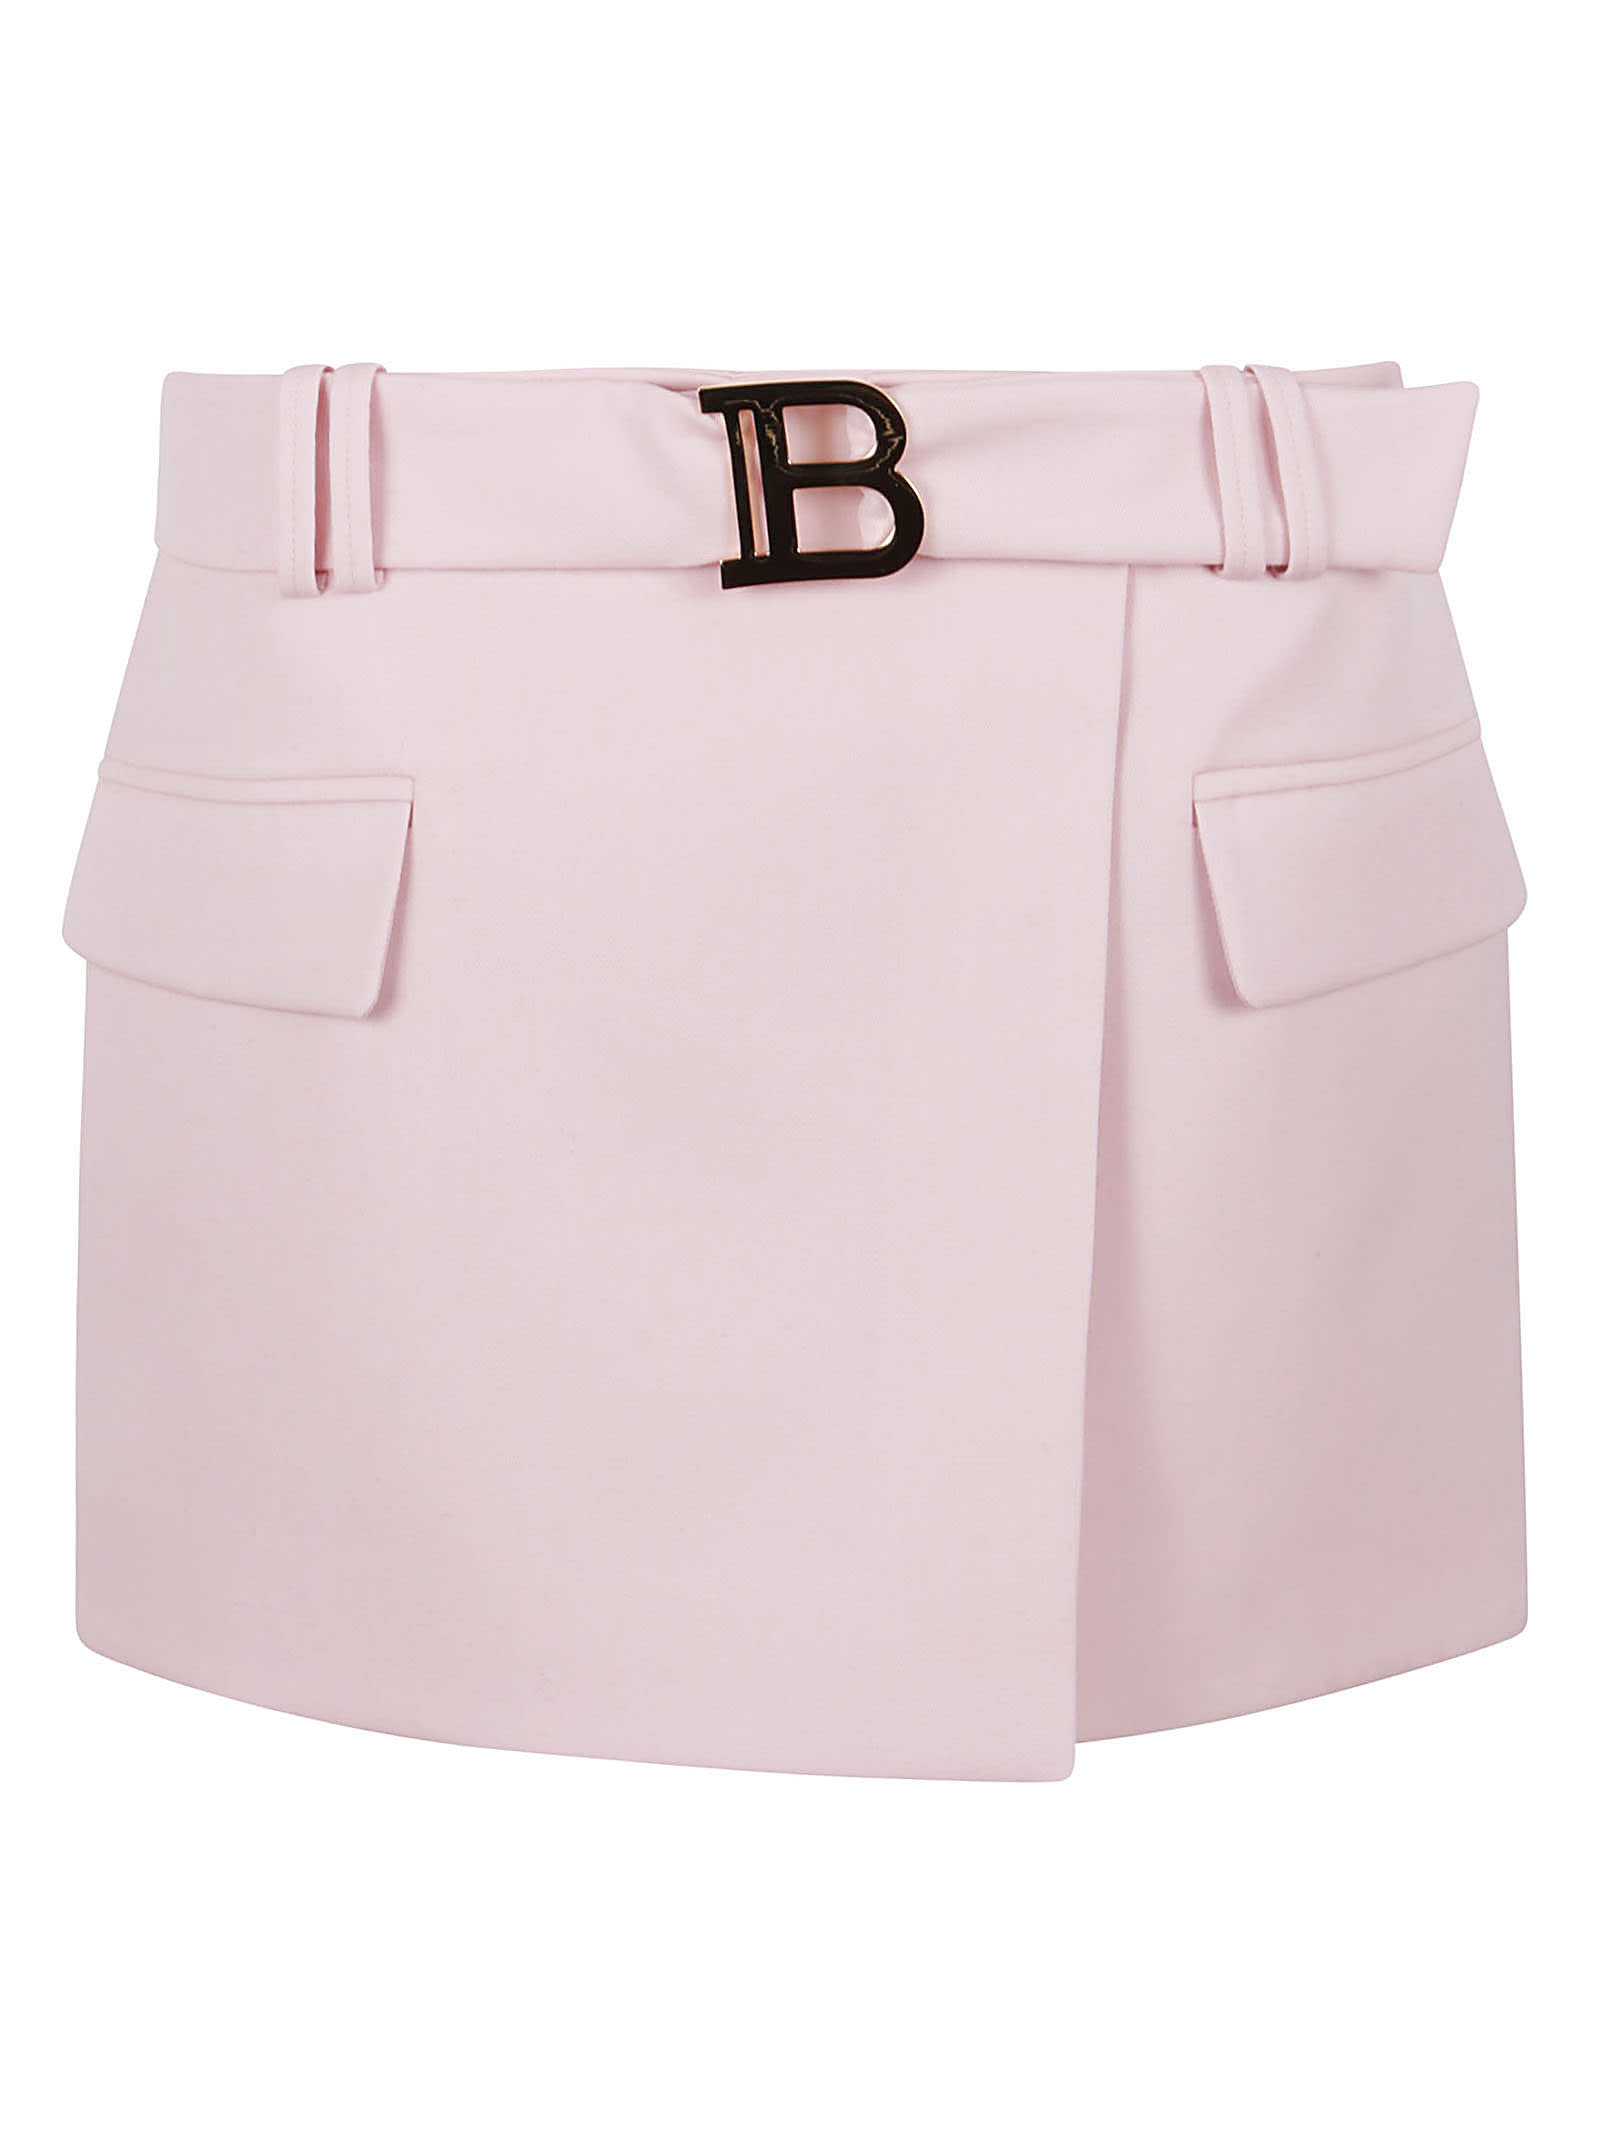 Balmain Short Low-rise Belted Gdp Skirt